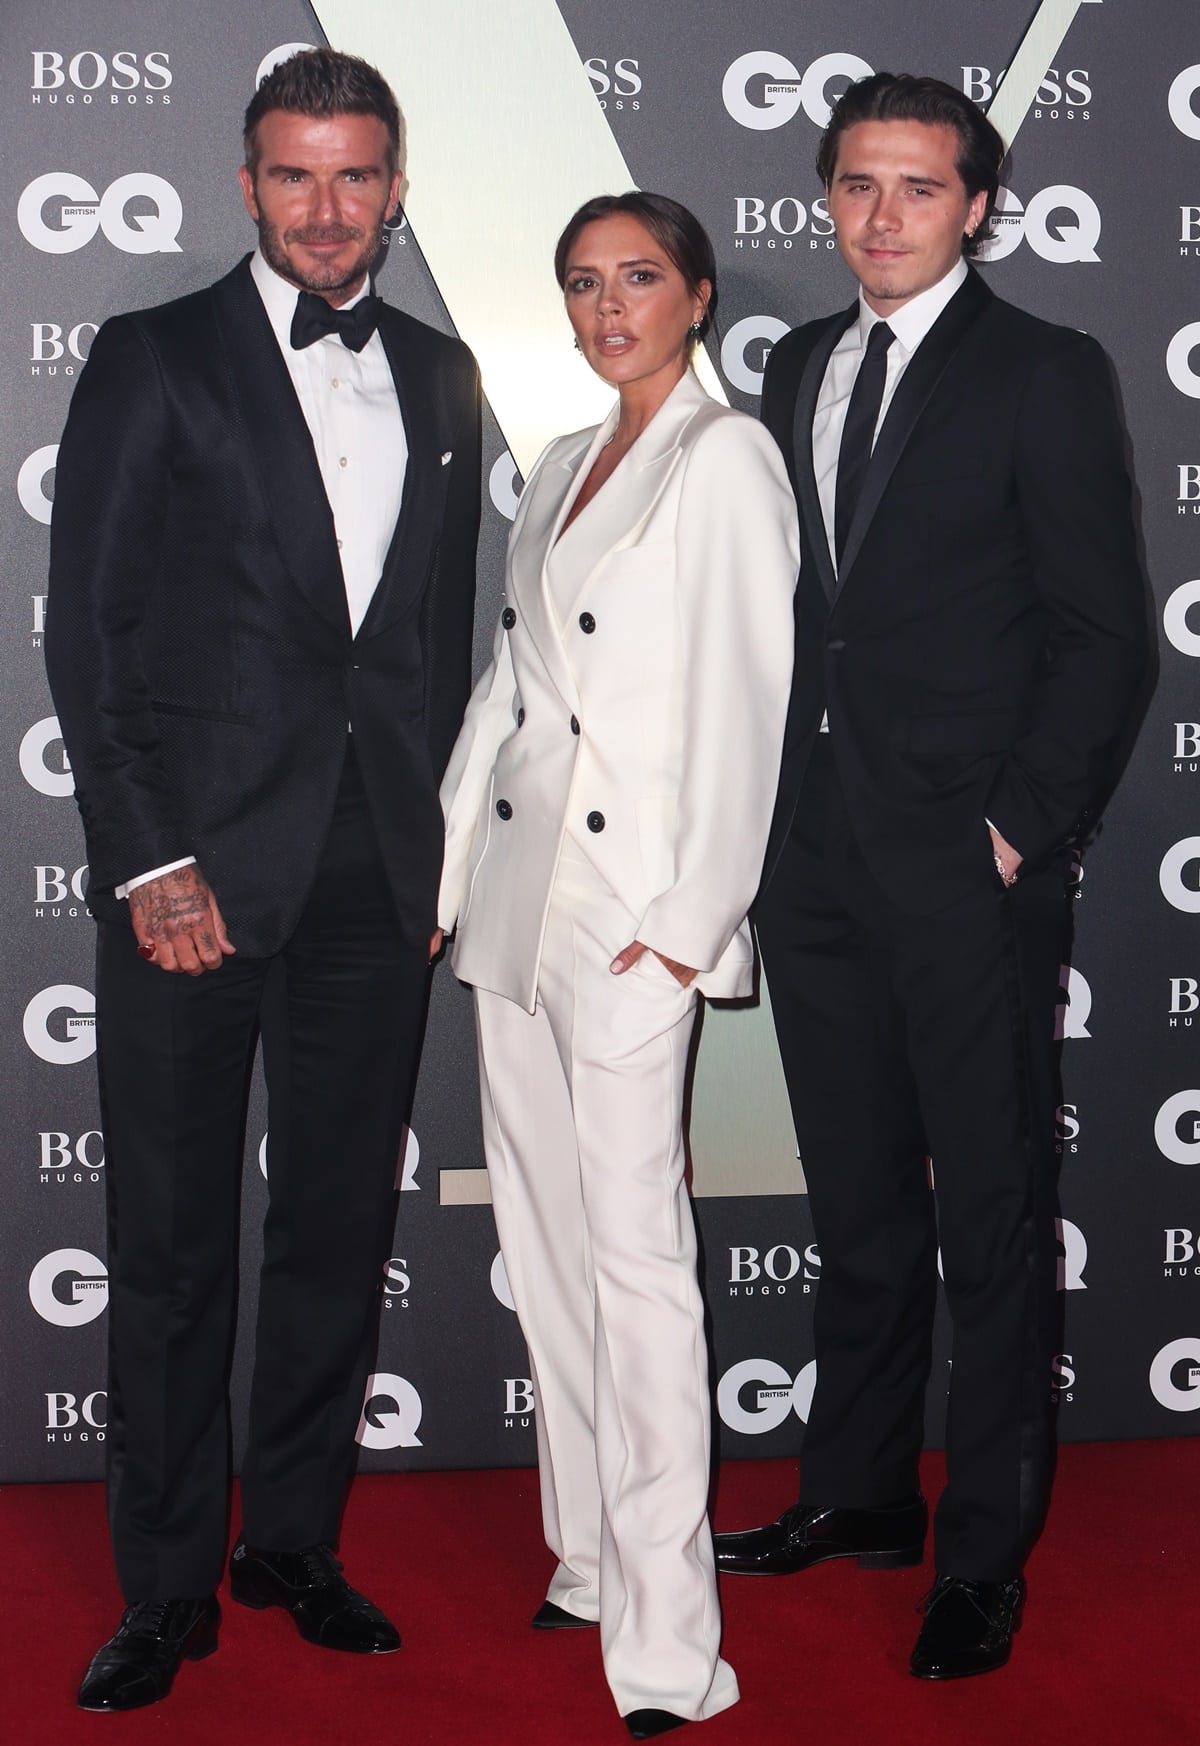 David Beckham, Victoria Beckham, and their son Brooklyn Beckham attend the GQ Men Of The Year Awards 2019